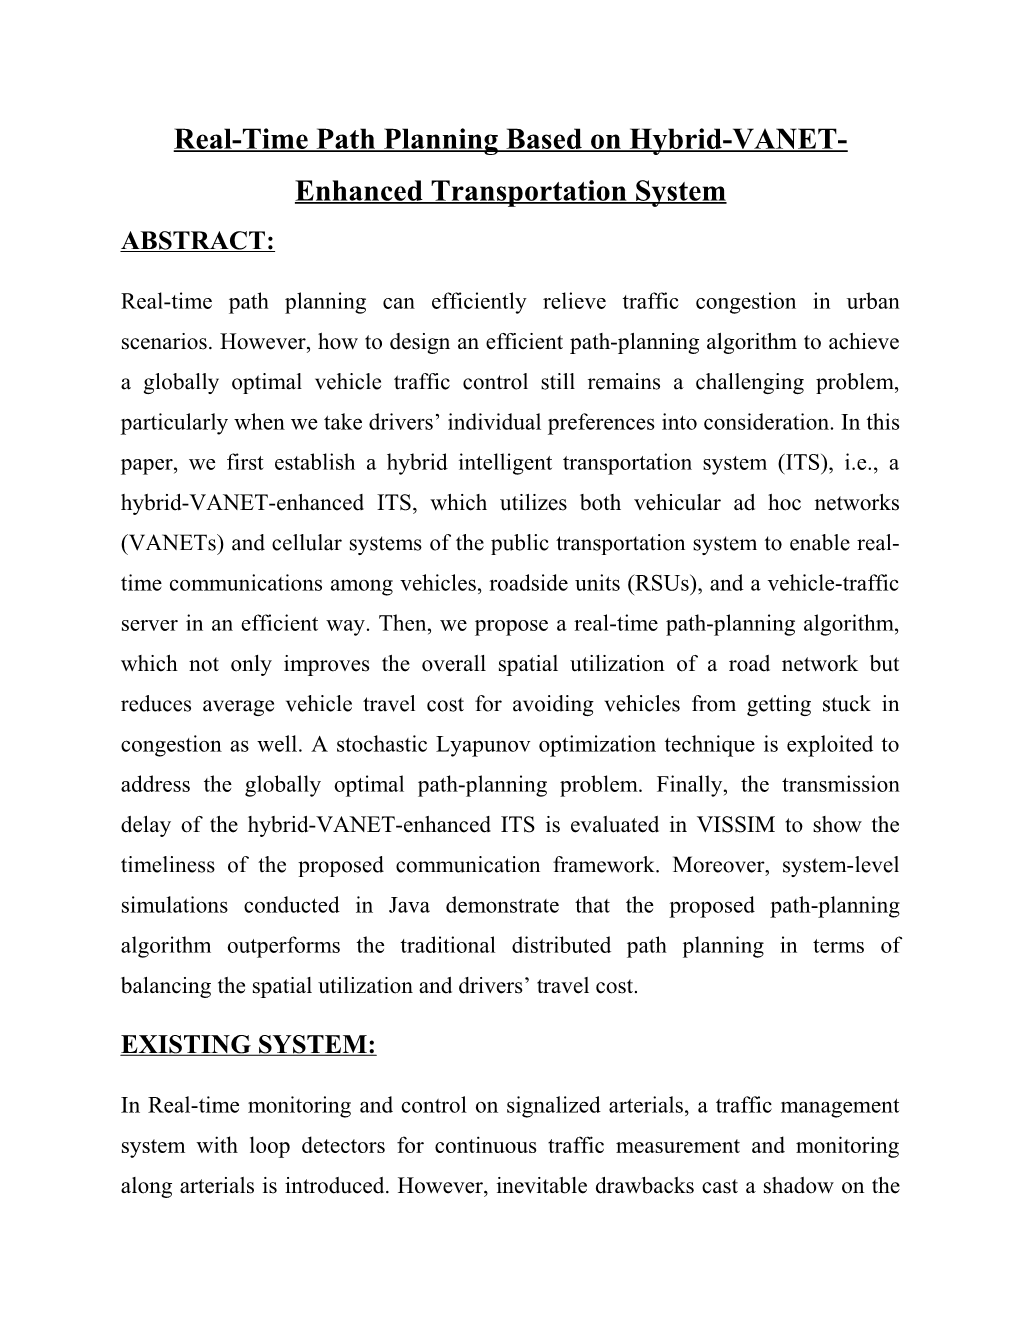 Real-Time Path Planning Based on Hybrid-VANET-Enhanced Transportation System